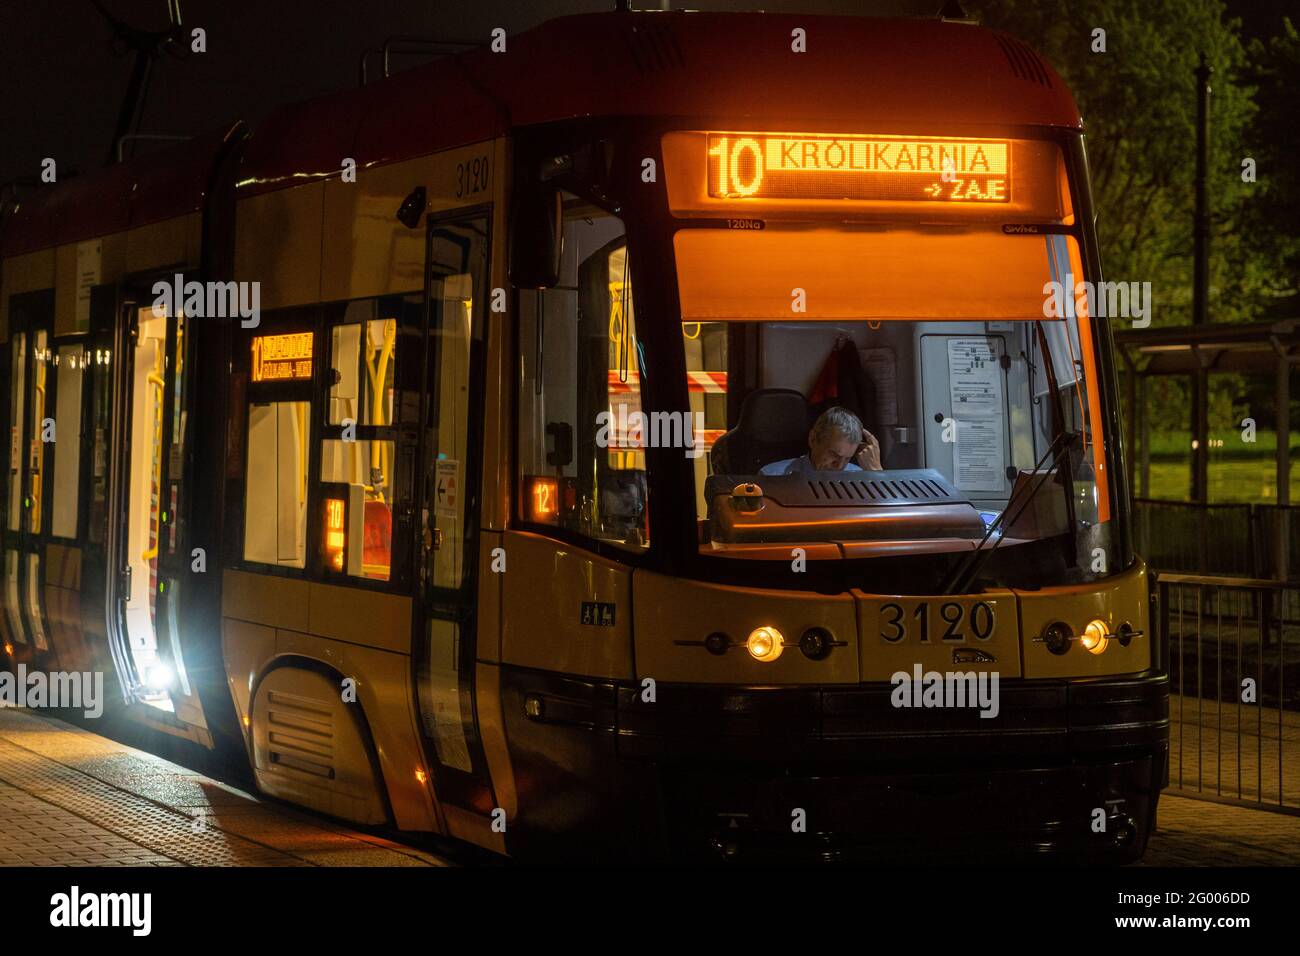 Tramway no. 10 in Warsaw (Poland) Stock Photo